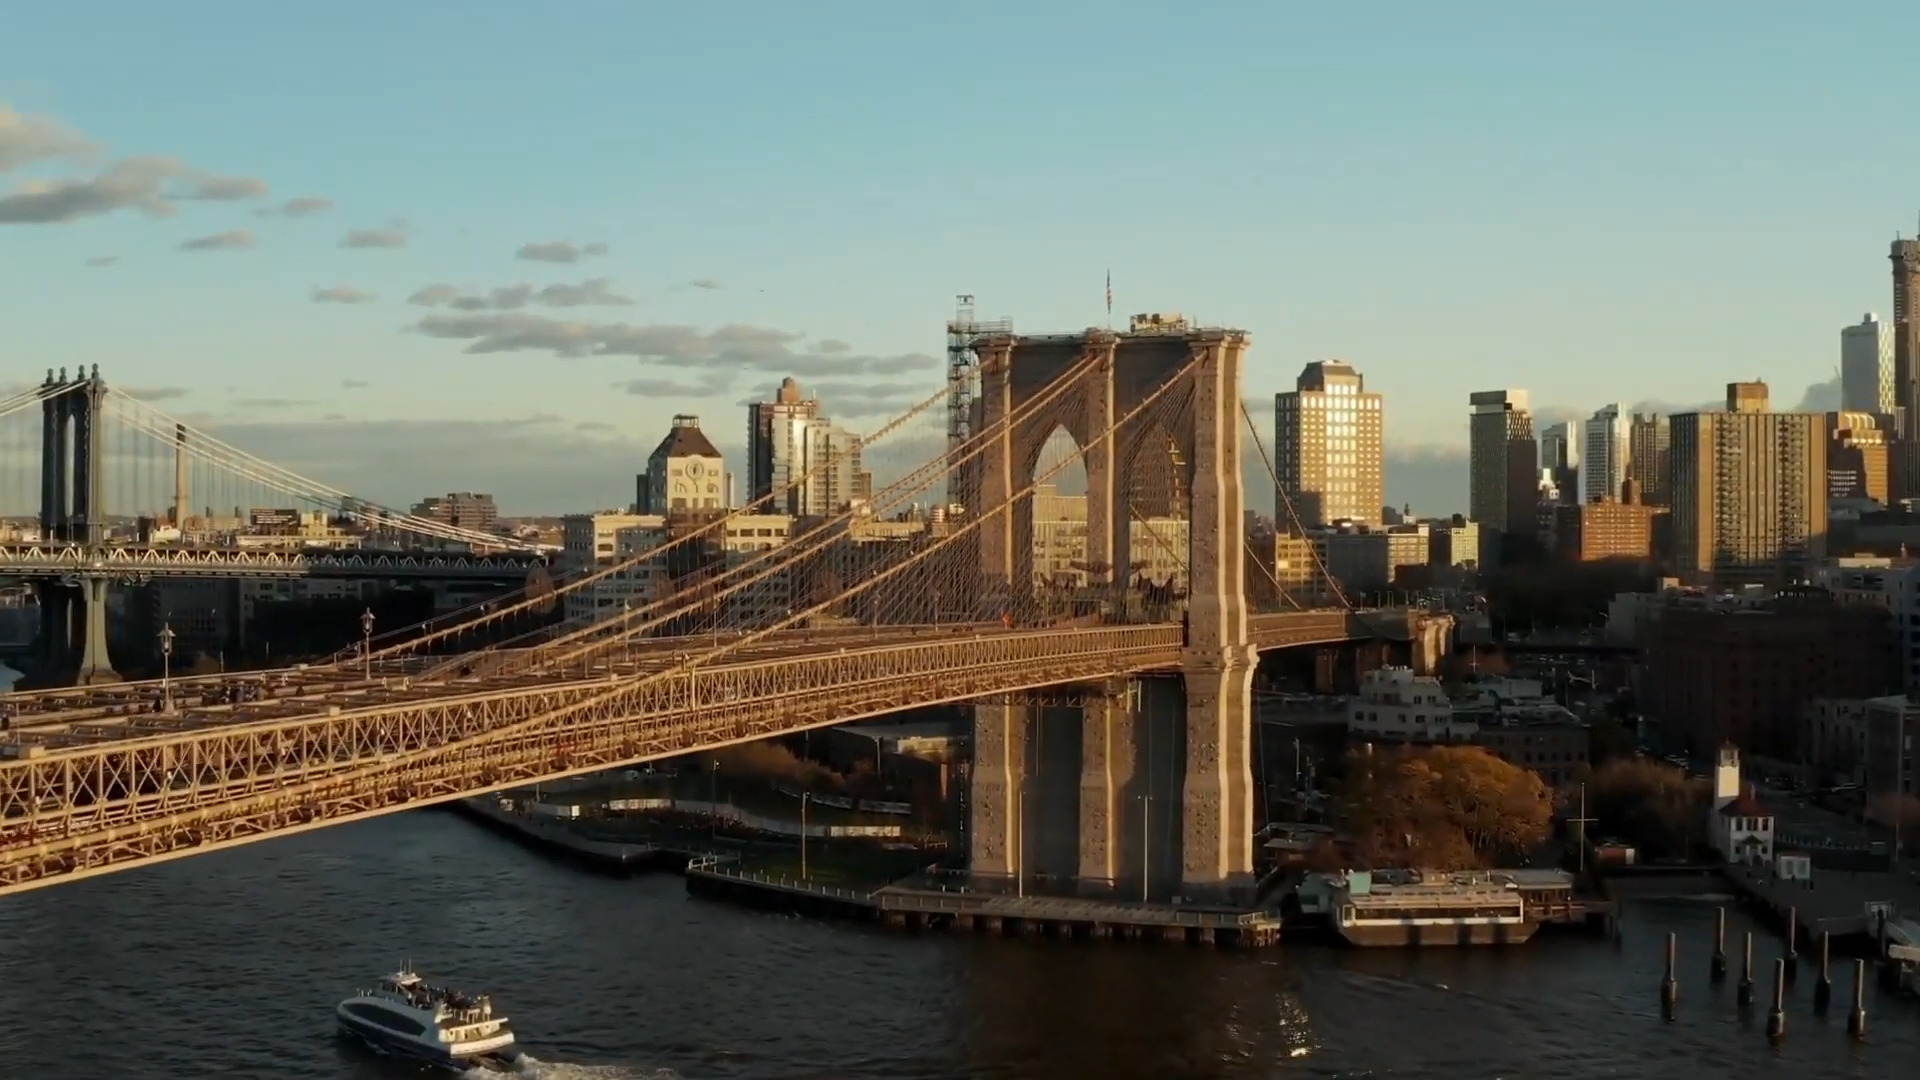 The Great East River Bridge